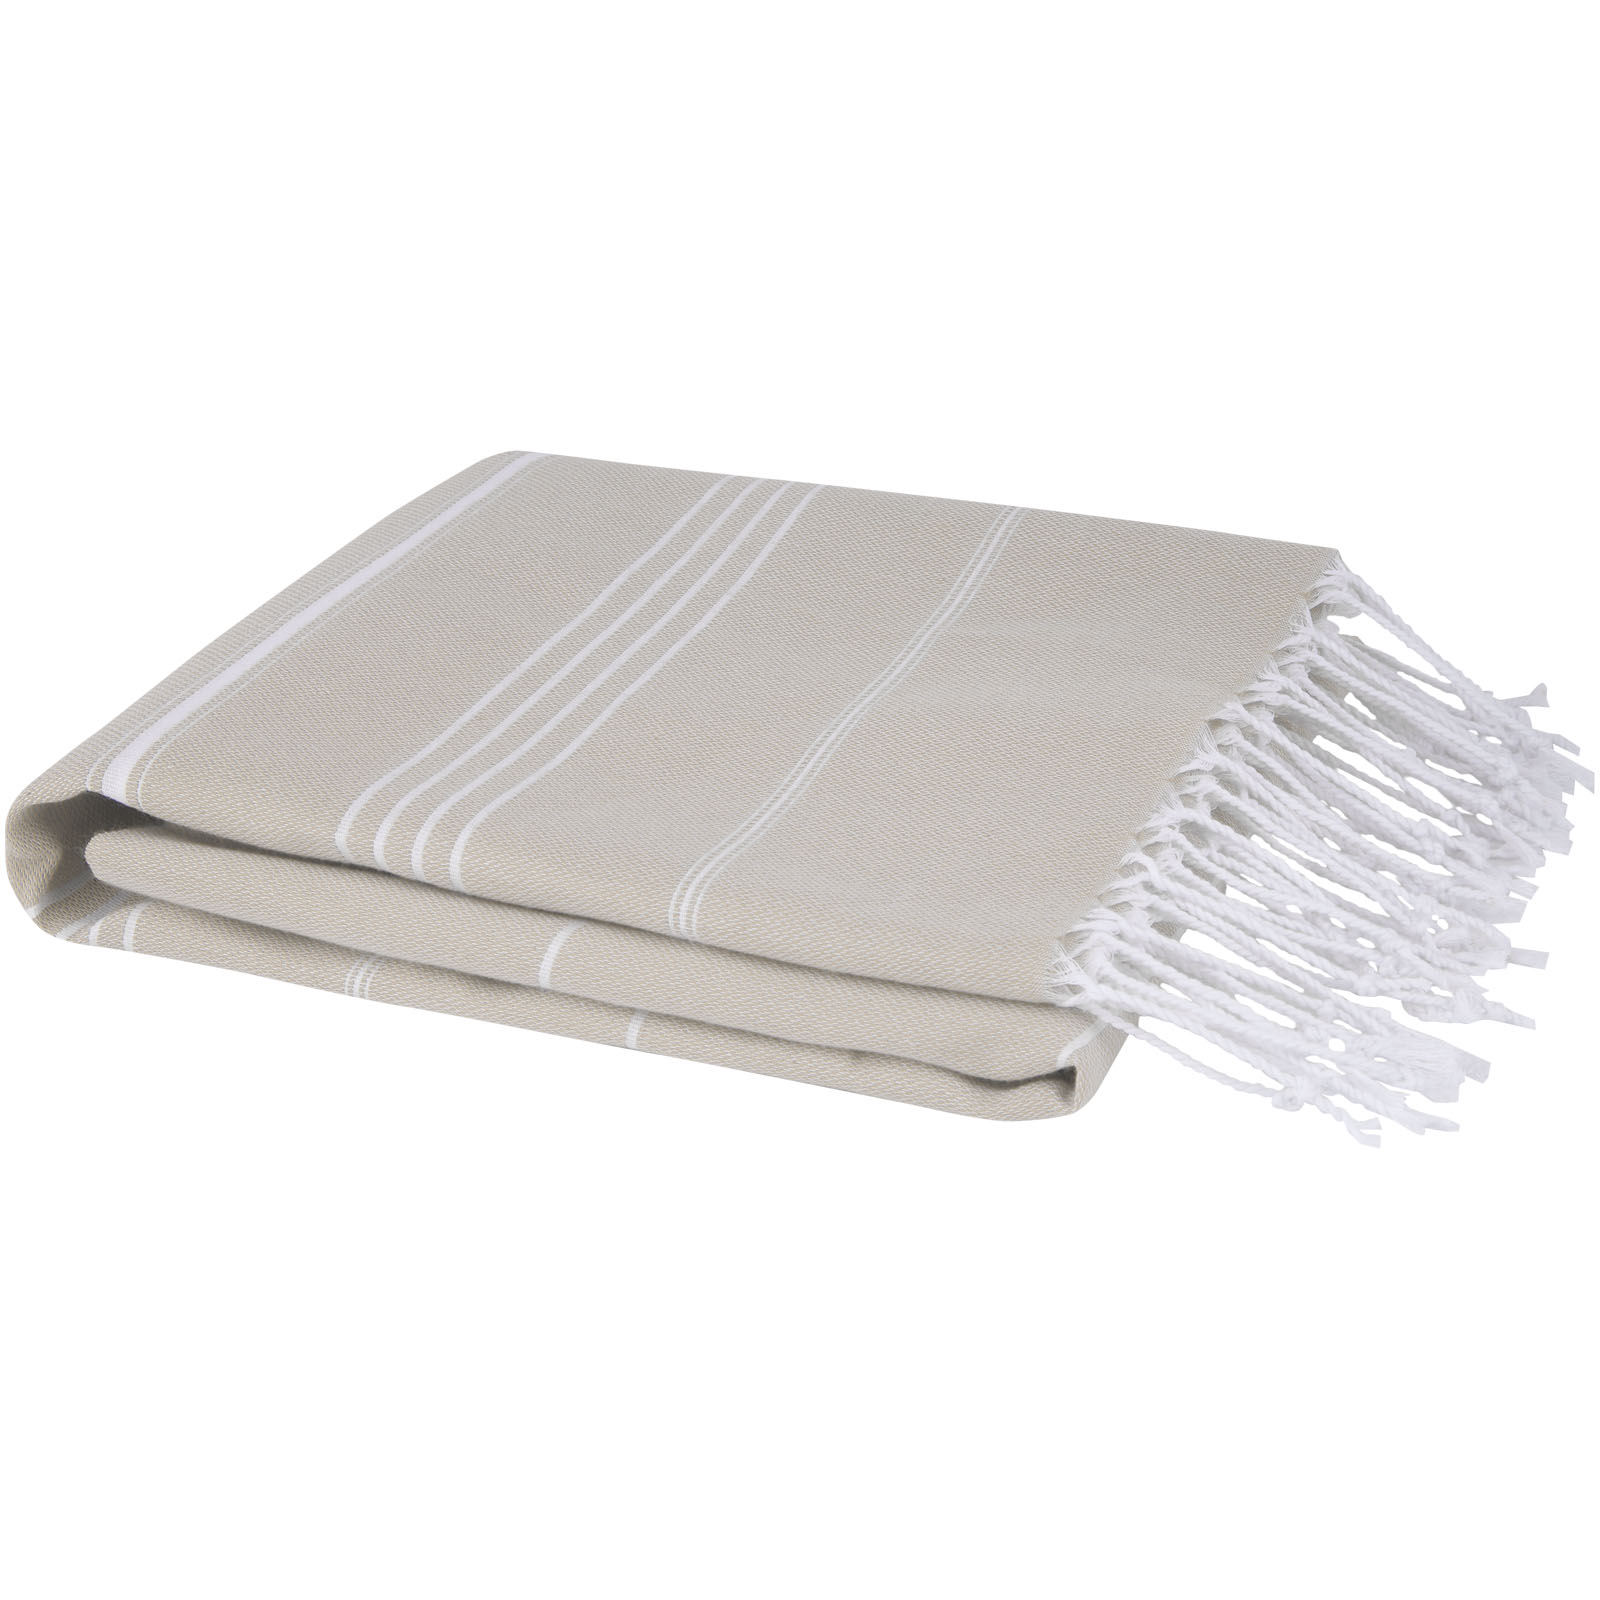 Towels - Anna 150 g/m² hammam cotton towel 100x180 cm